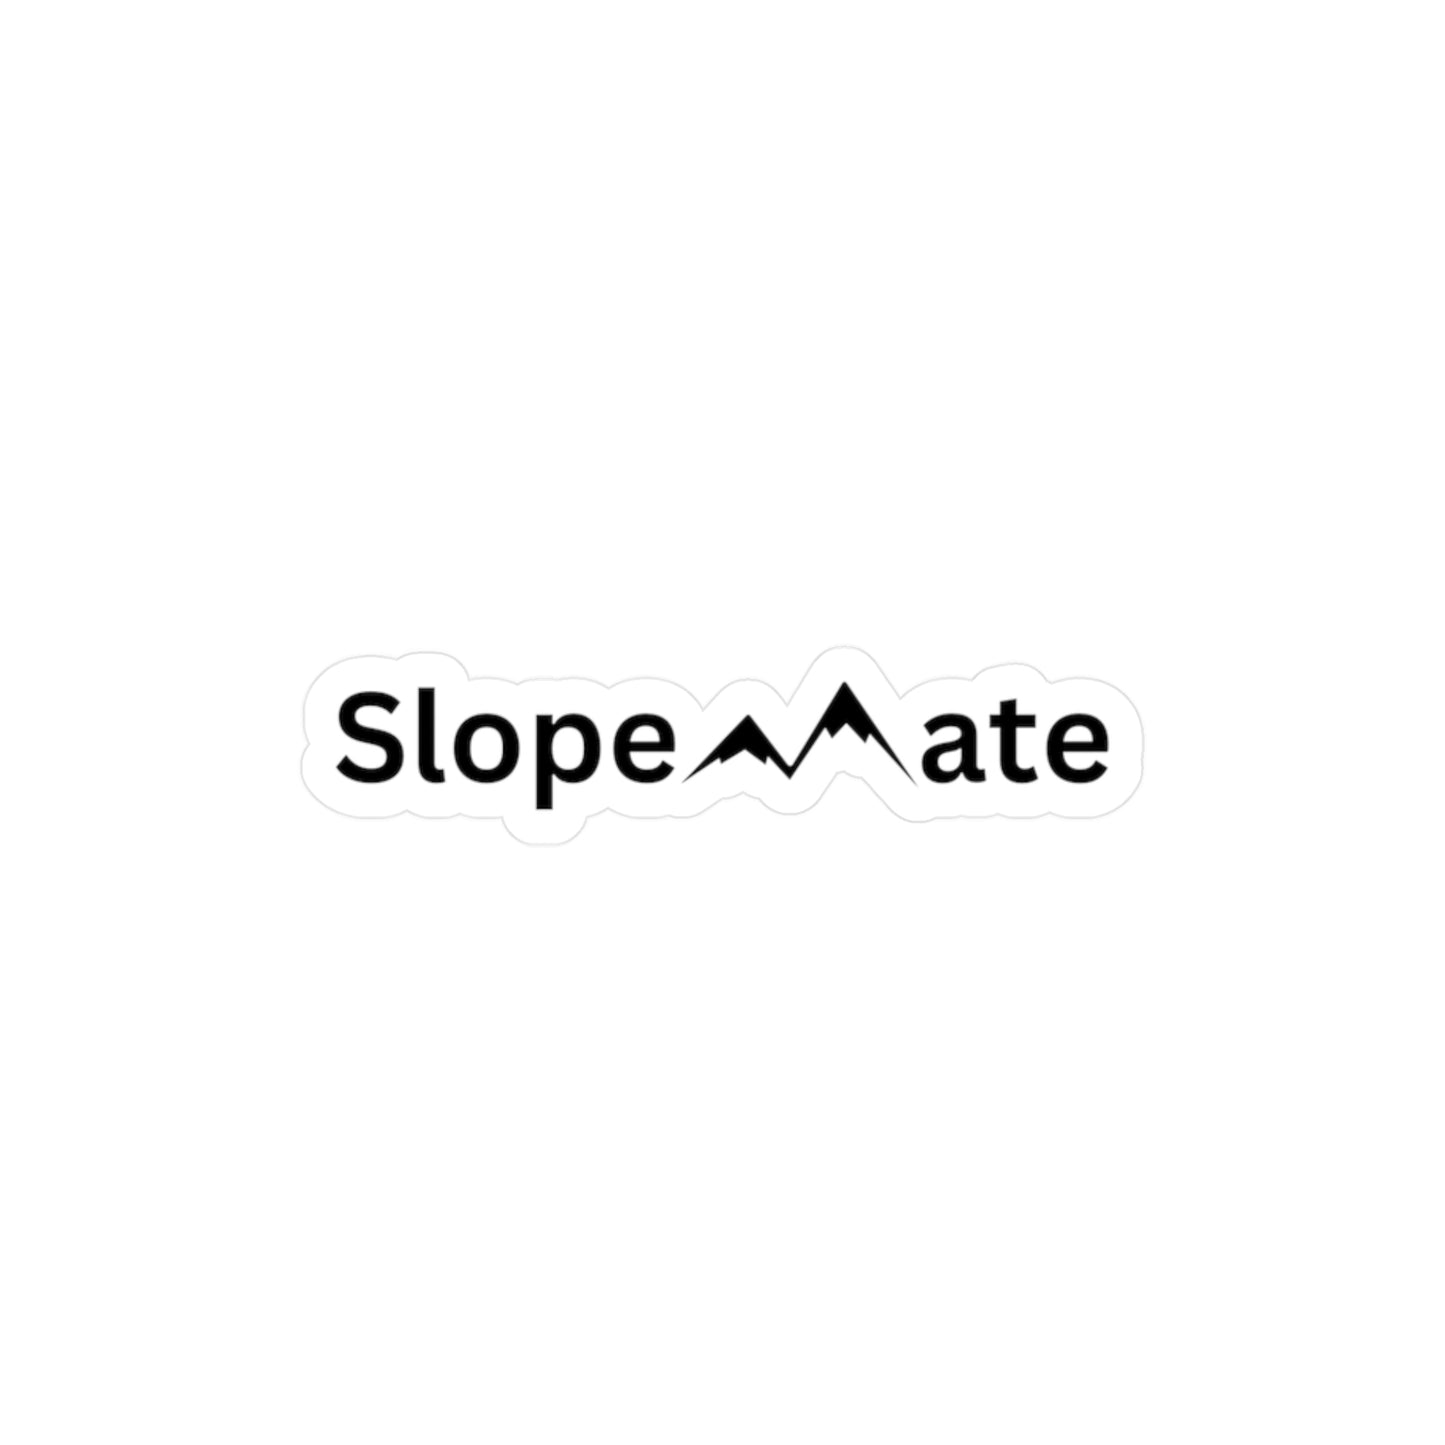 SlopeMate Sticker